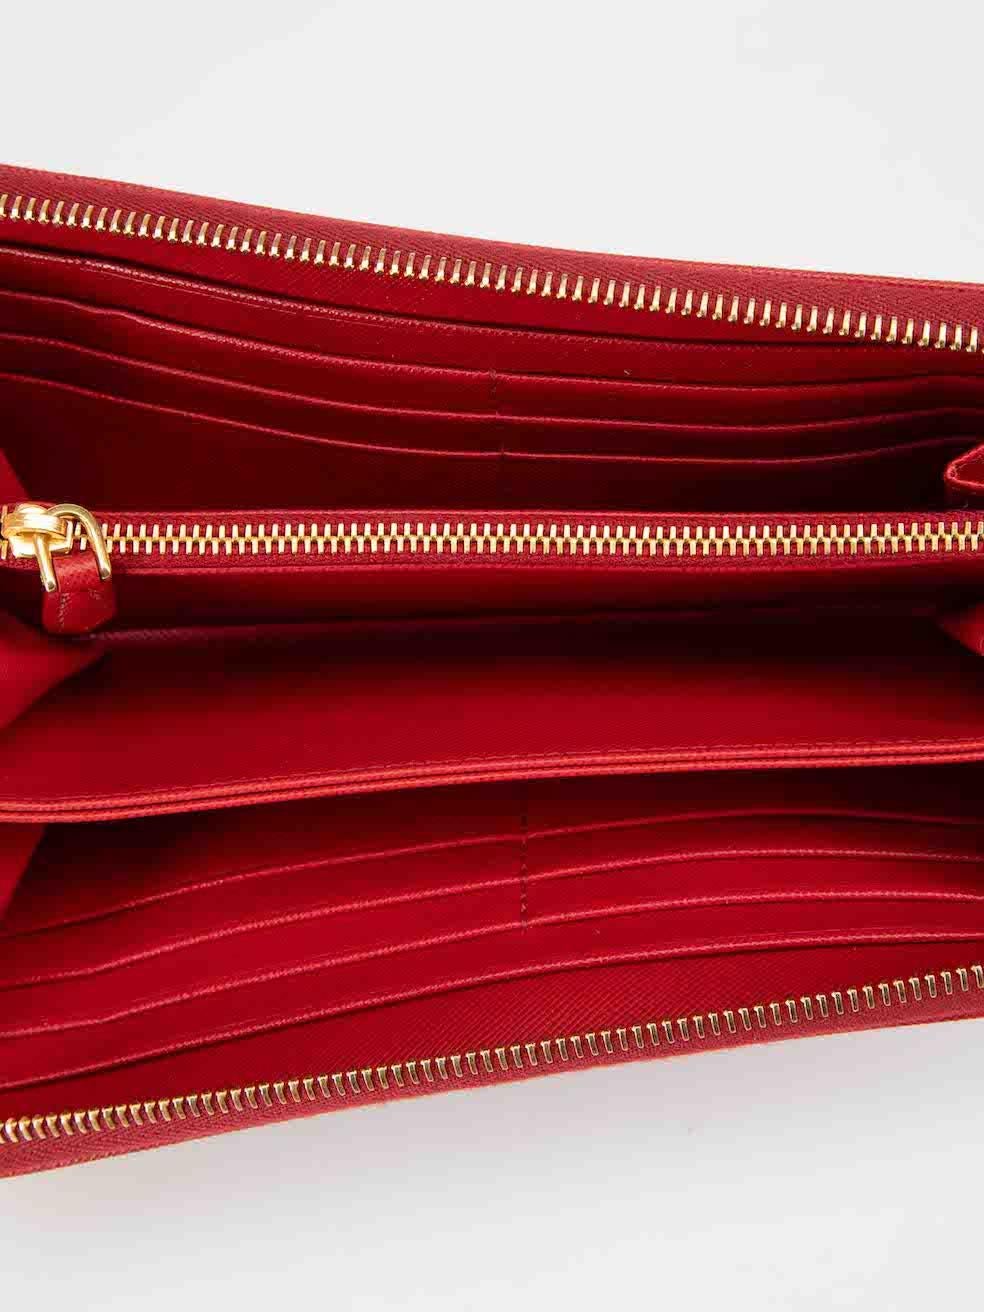 Prada Red Saffiano Leather Zip Around Wallet For Sale 1